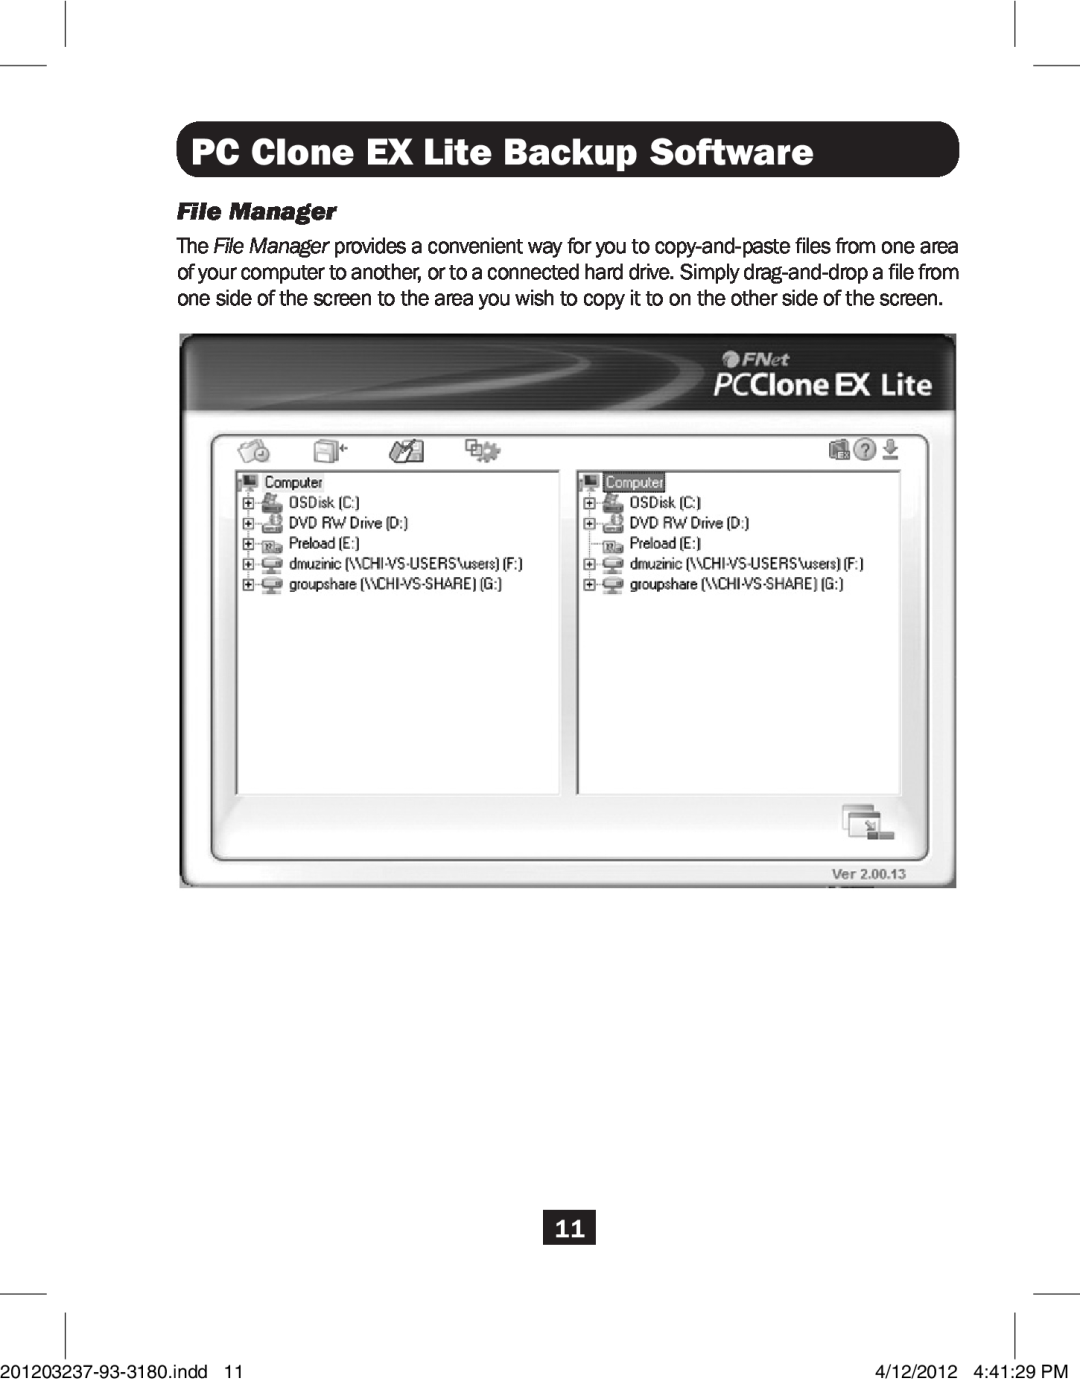 Tripp Lite U238-000-1 owner manual File Manager, PC Clone EX Lite Backup Software 